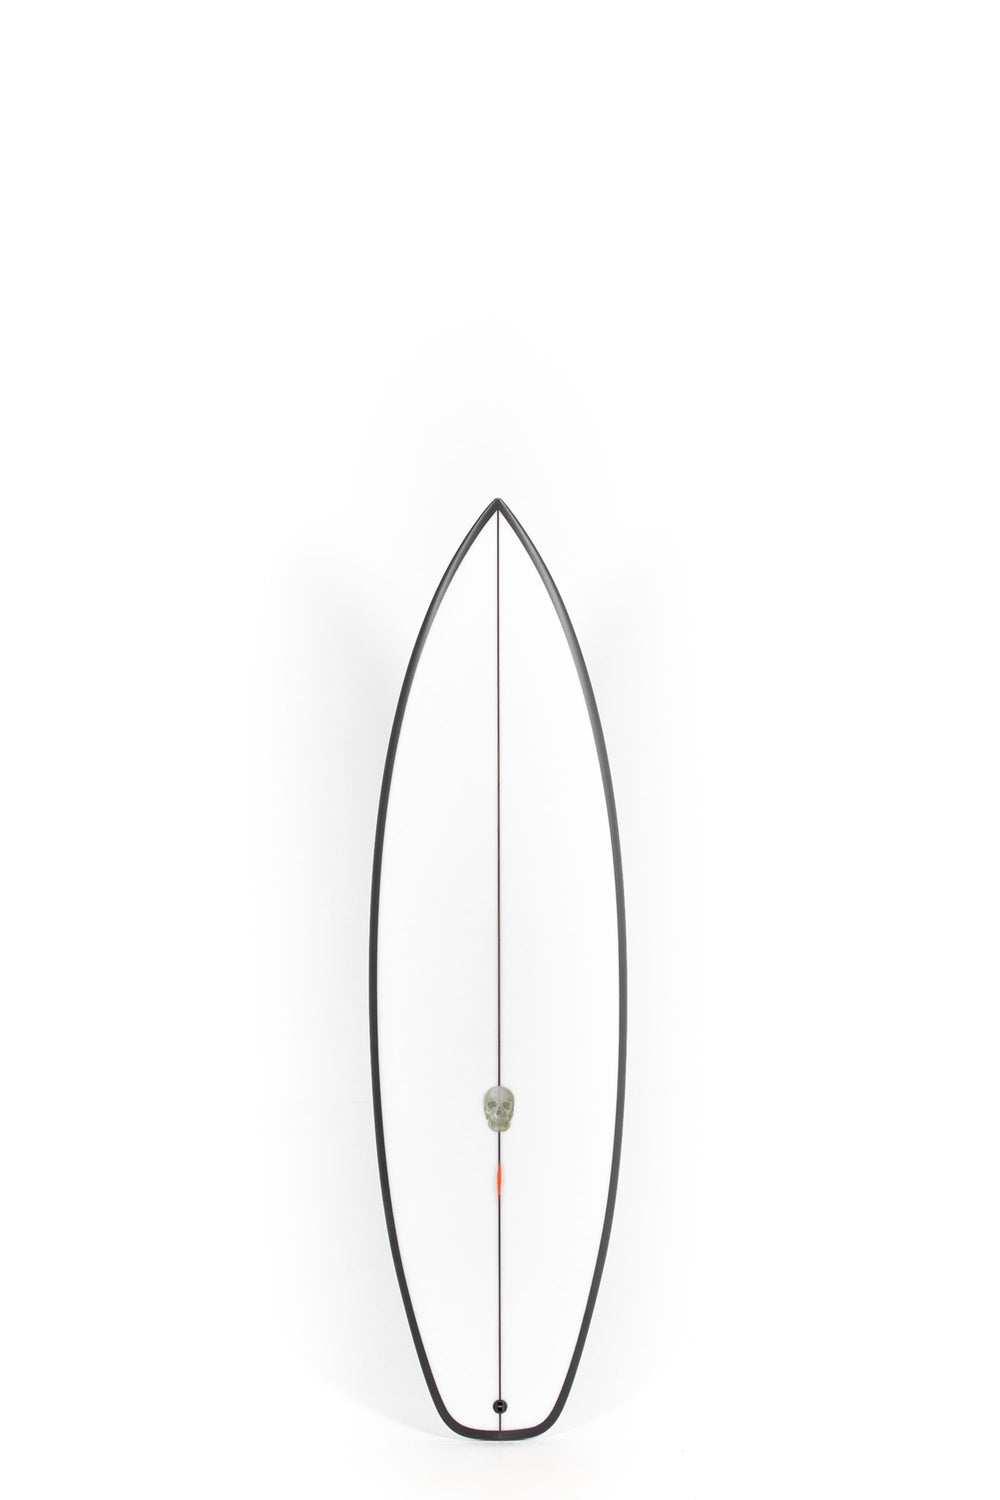 Pukas Surf Shop - Christenson Surfboards - OP2 - 5'9